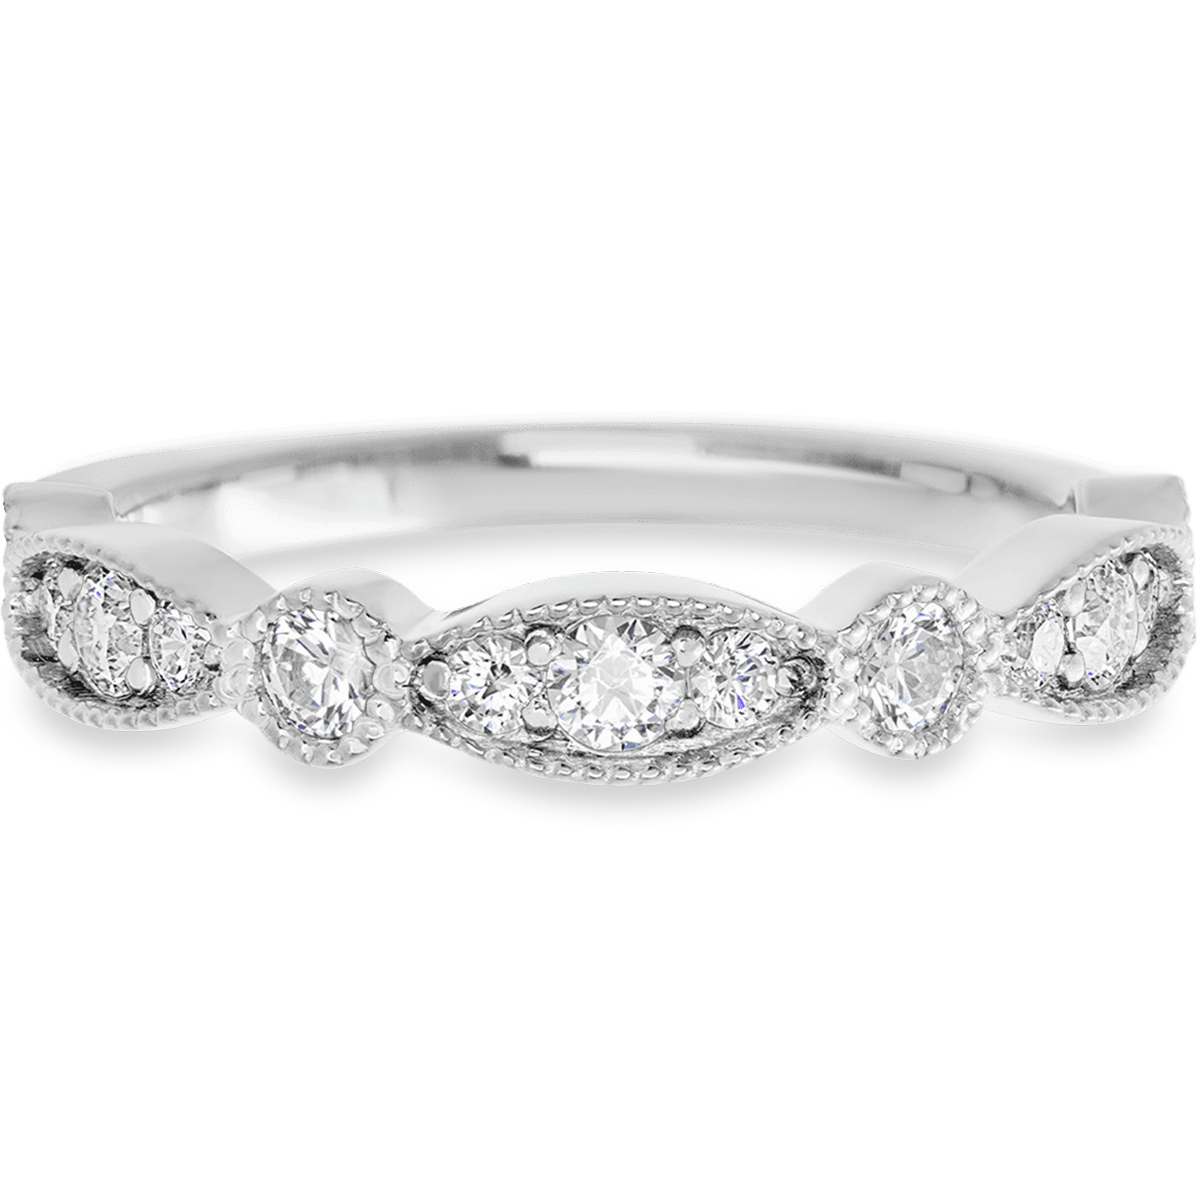 Vintage 14k White Gold + White Diamonds Womens Wedding or Everyday Ring